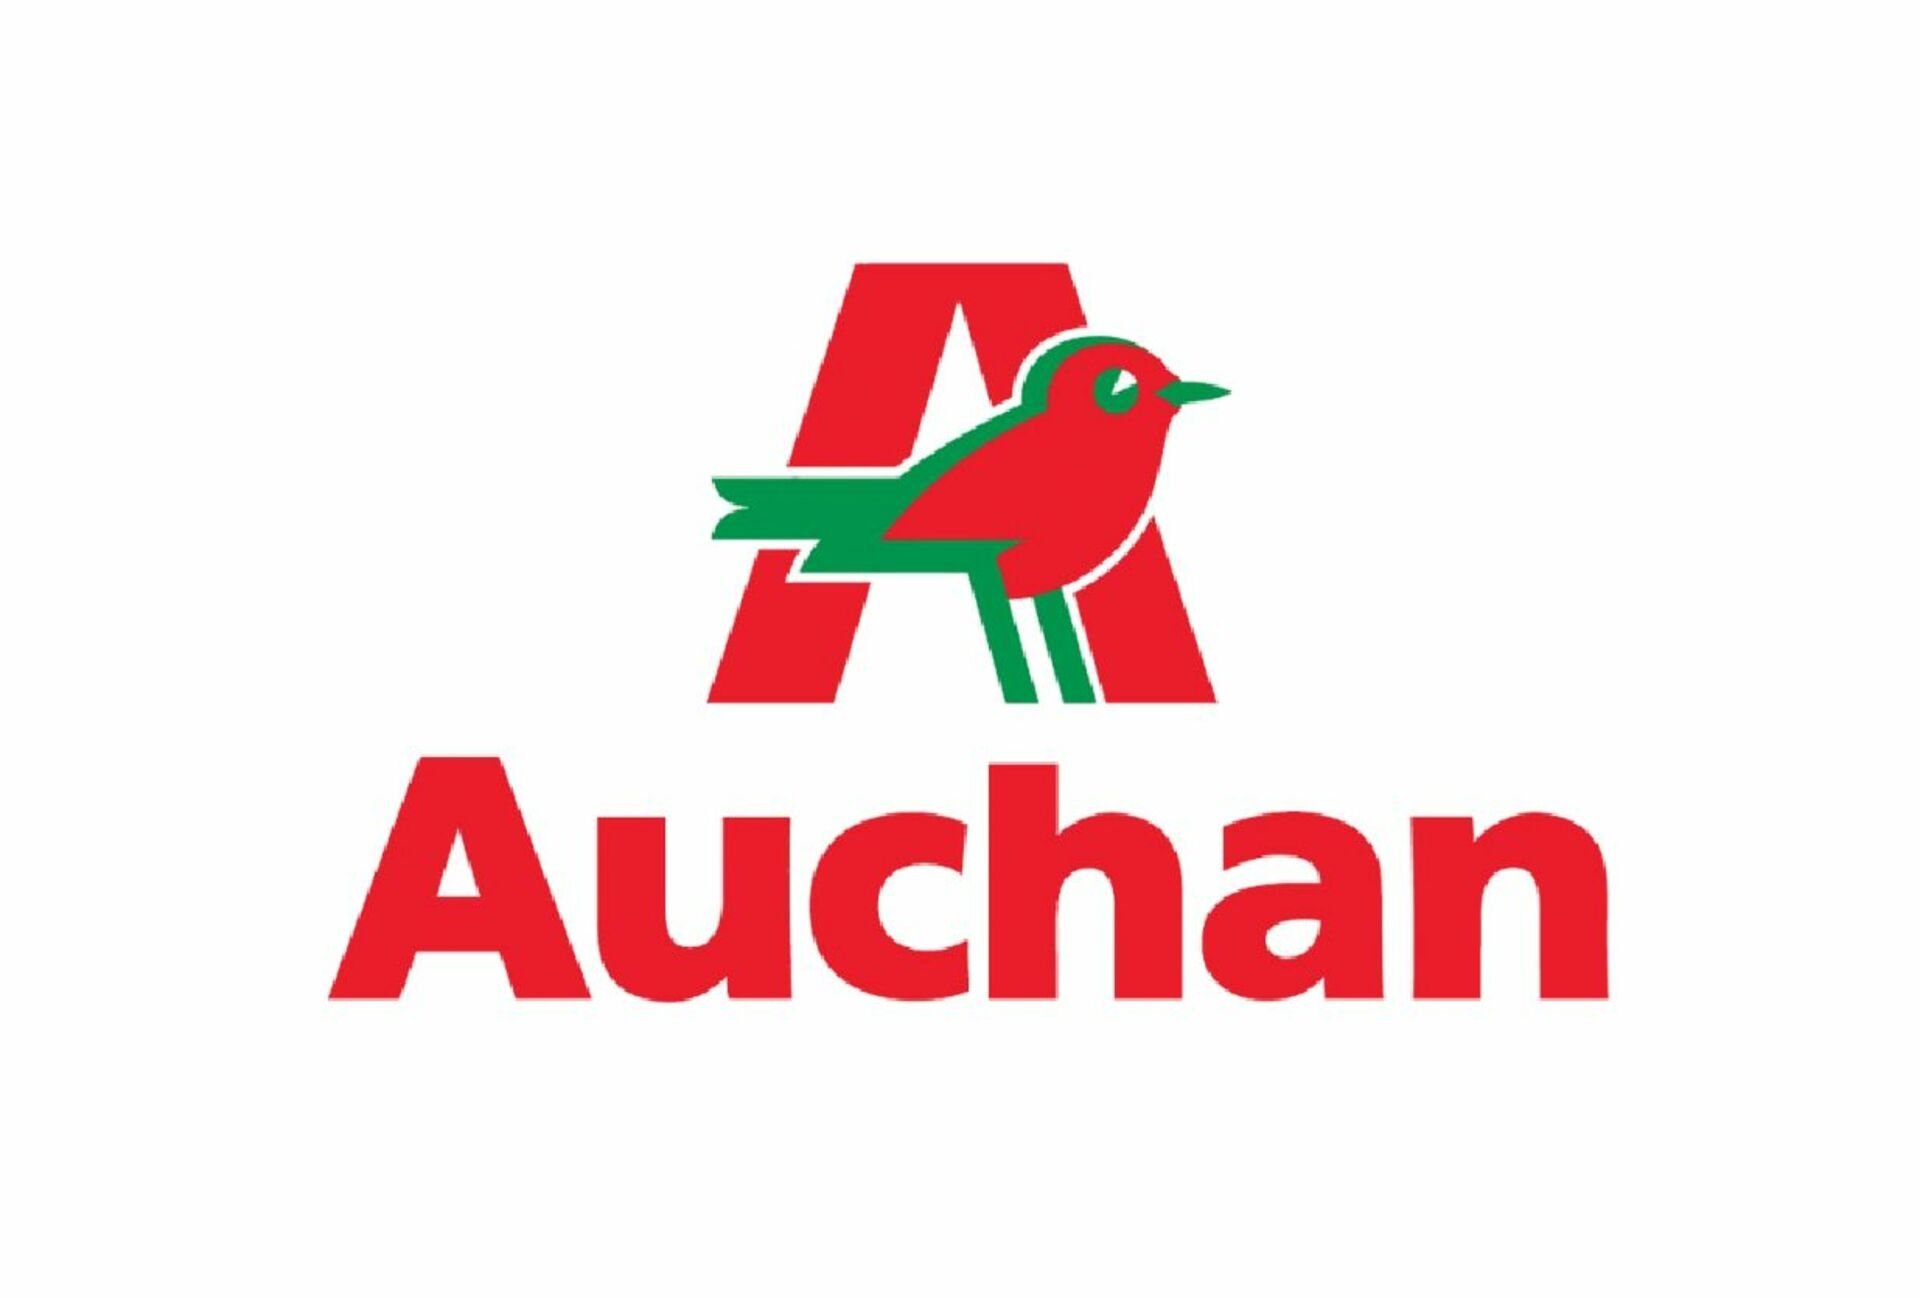 Auchan logo. Ашан магазин логотип. Ашан логотип на прозрачном фоне. Акшан. Значок магазина Ашан.